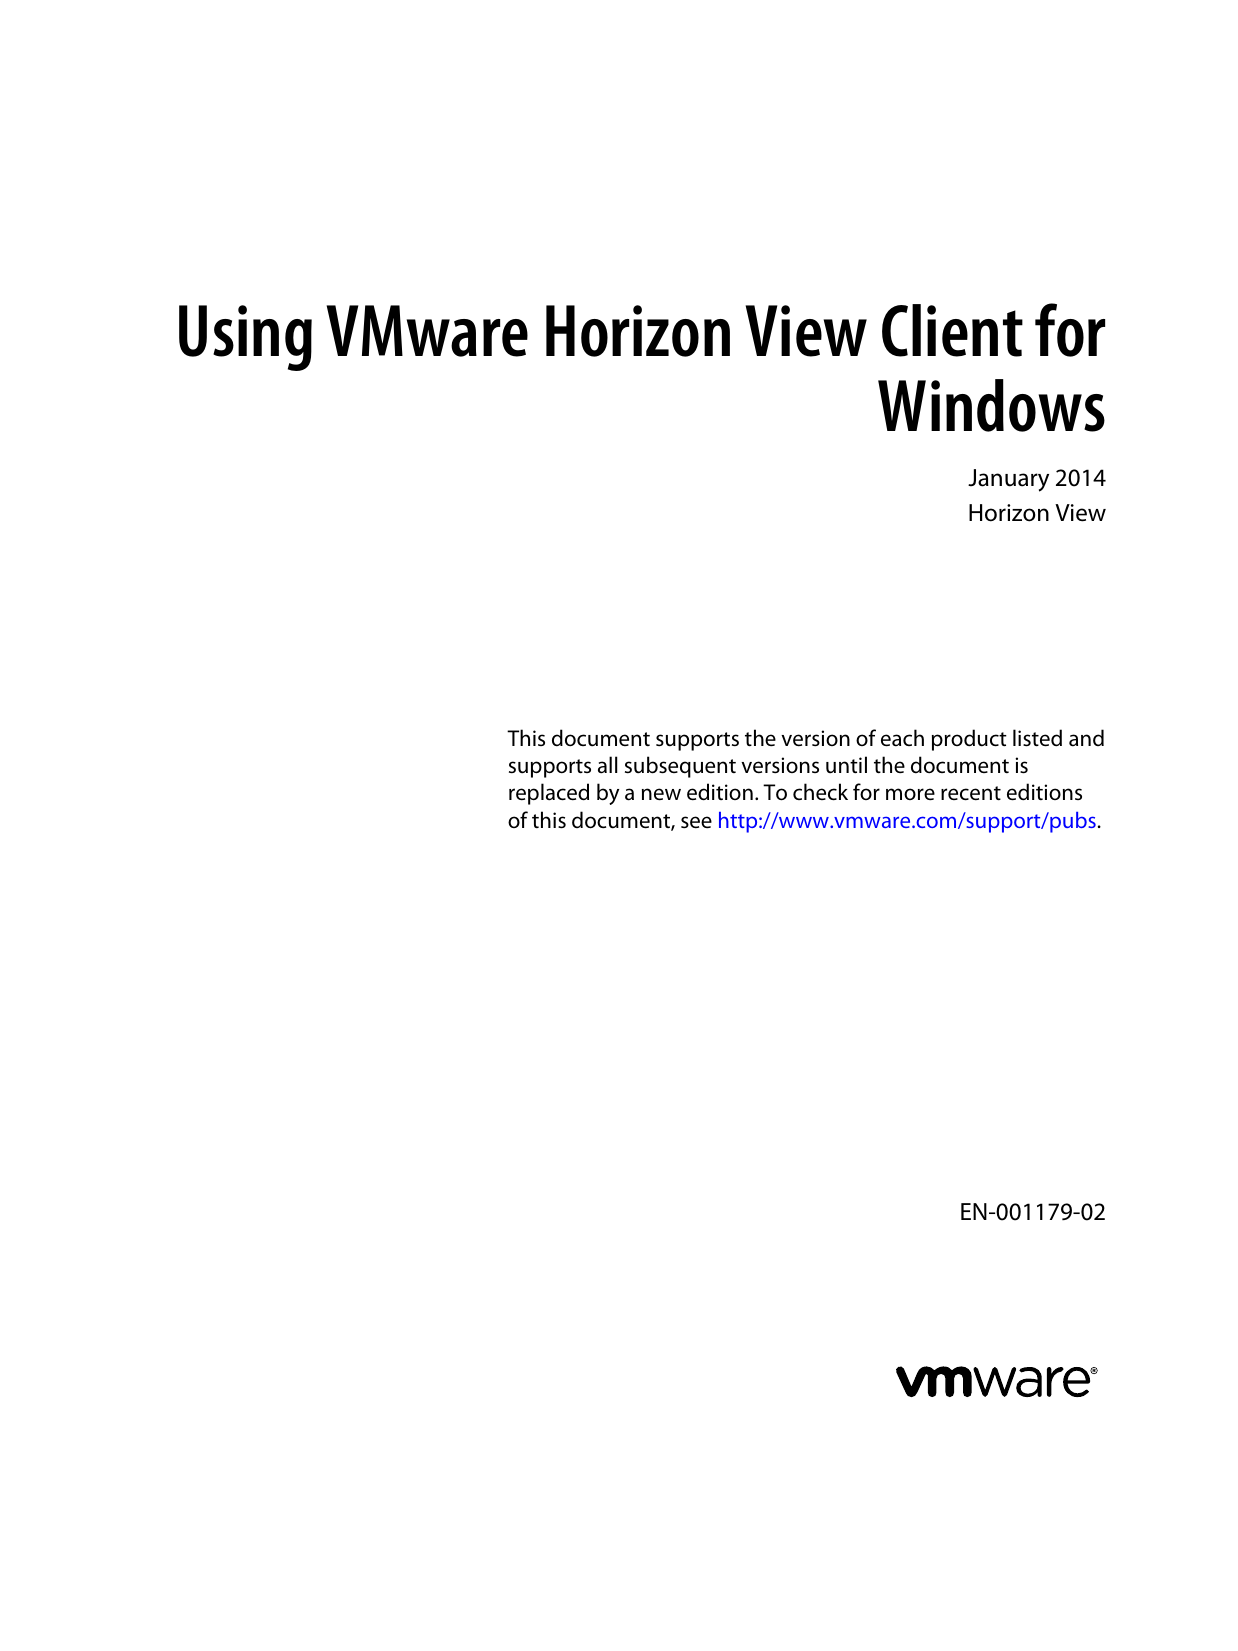 vmware horizon view client tunnel certificate invalid